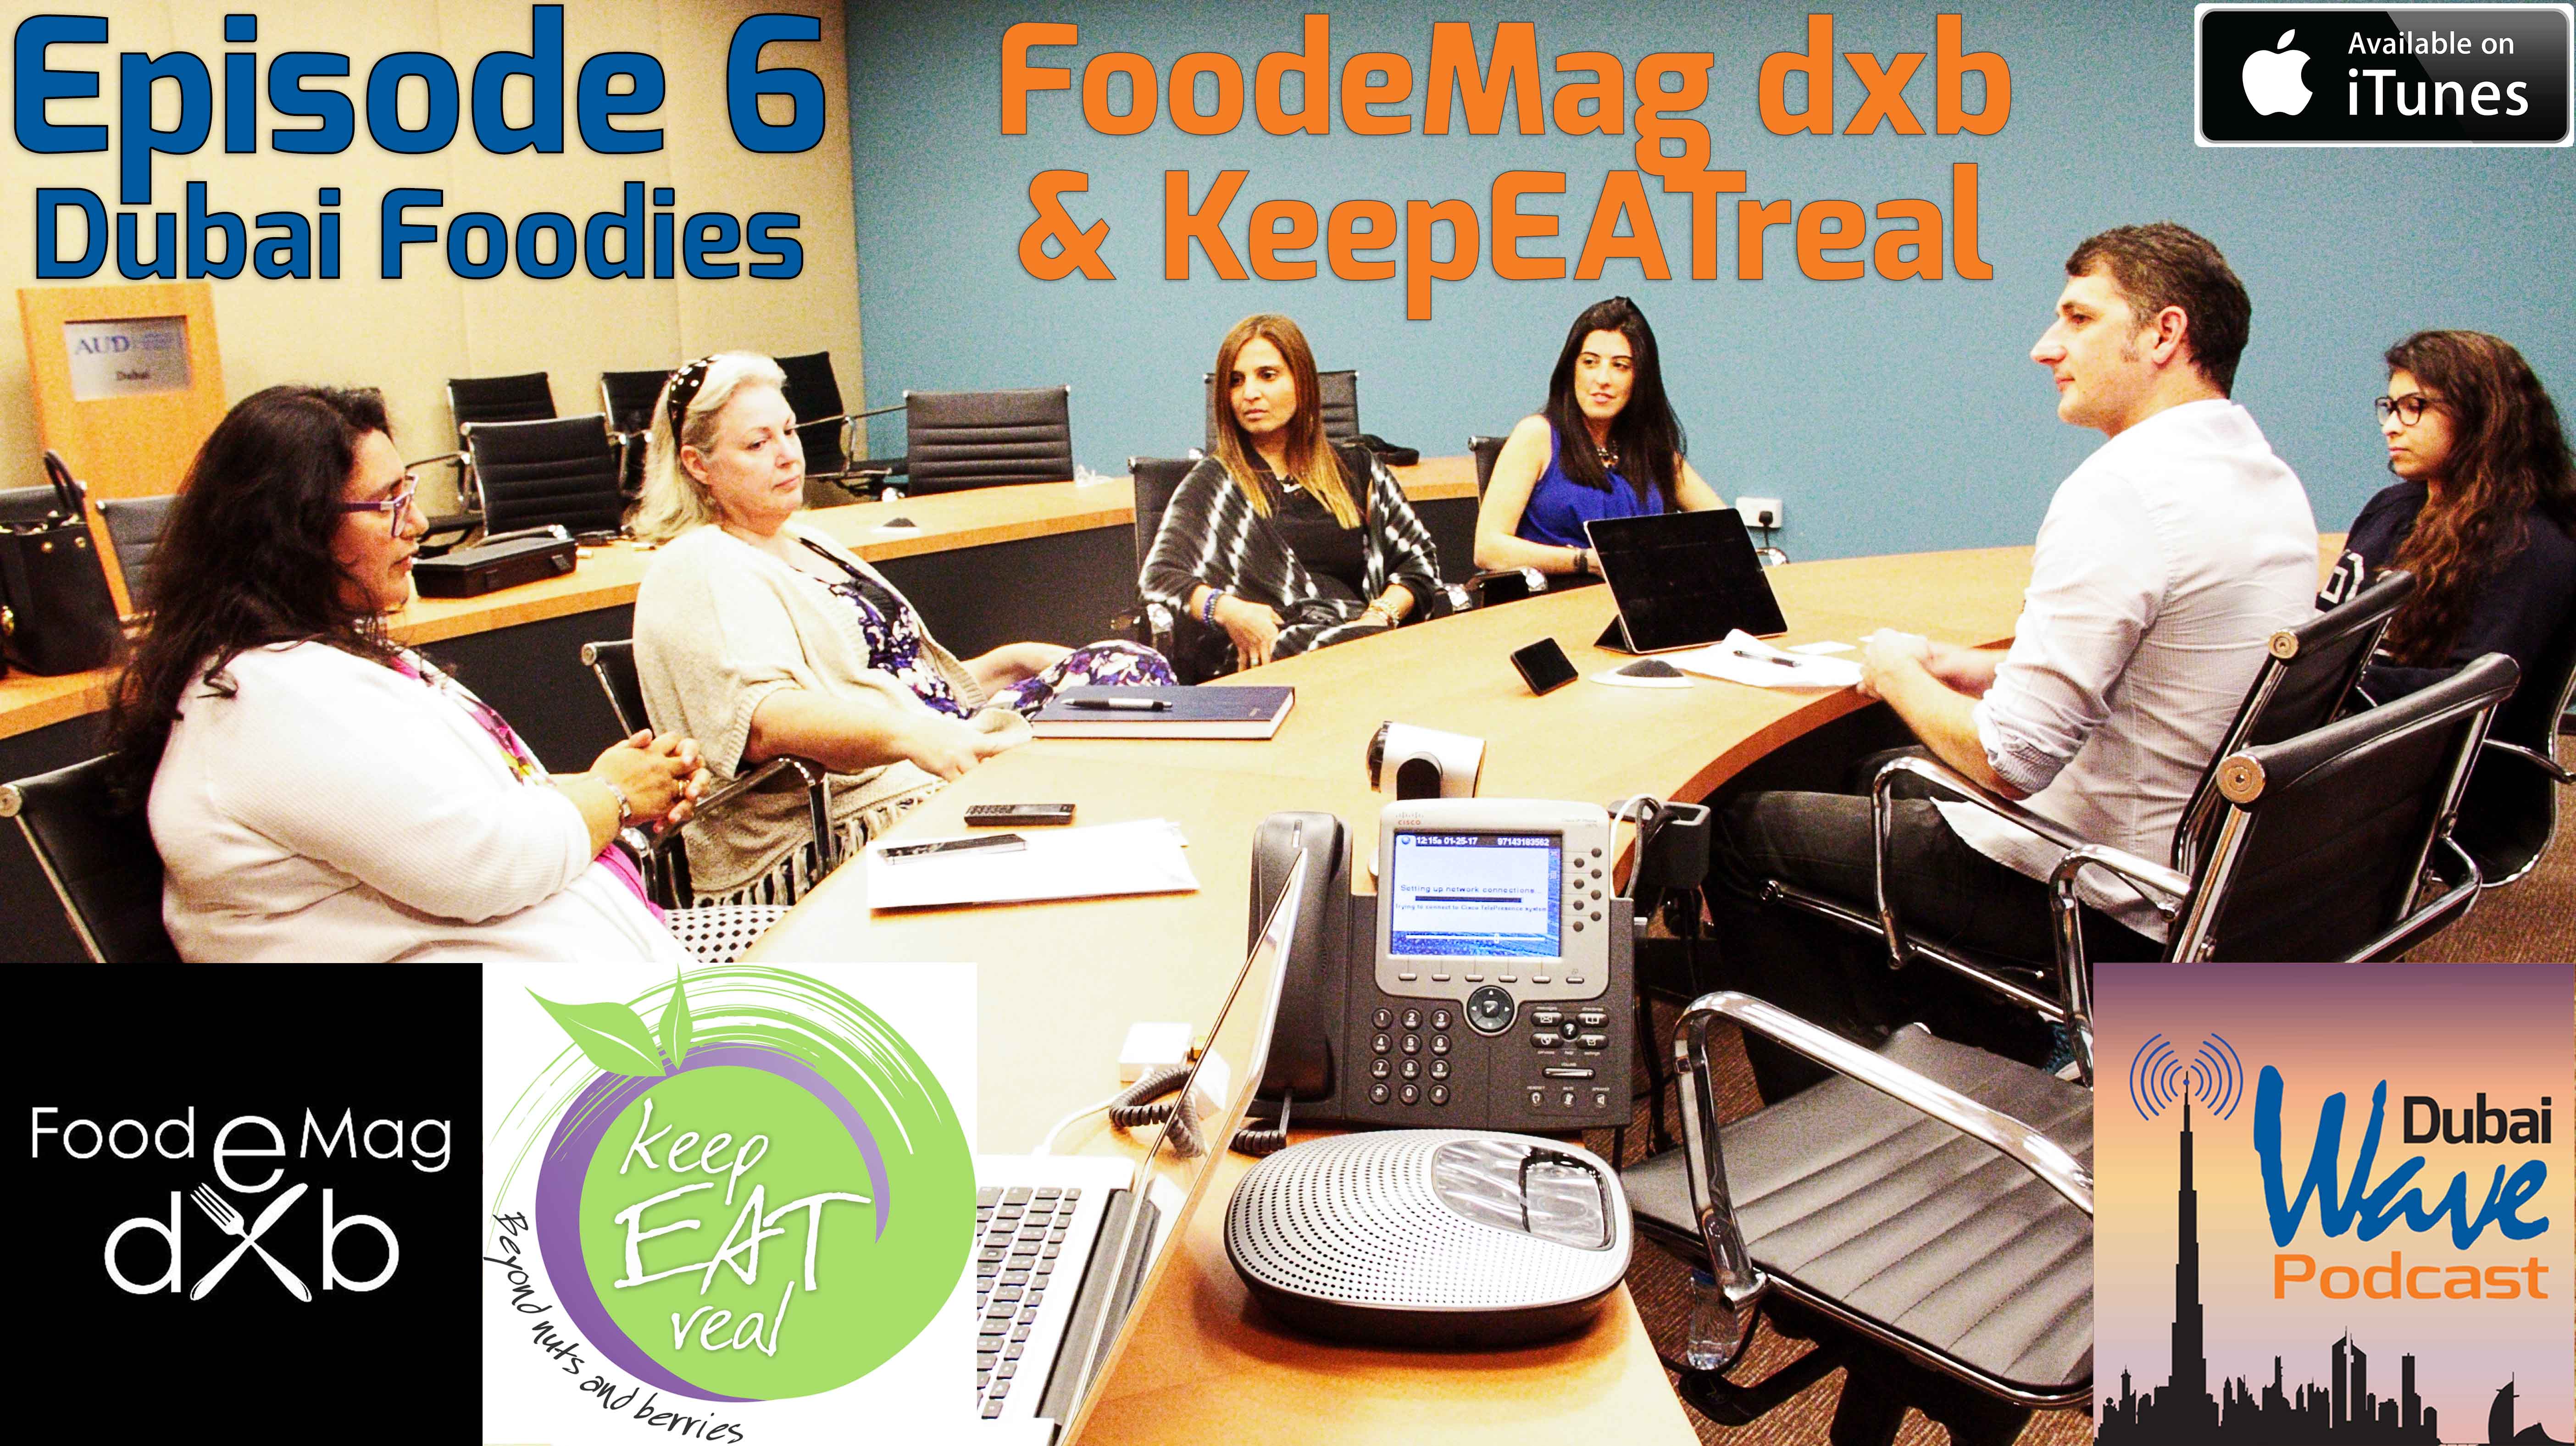 Ep 6: Dubai Foodies - FoodeMag dxb & KeepEATreal